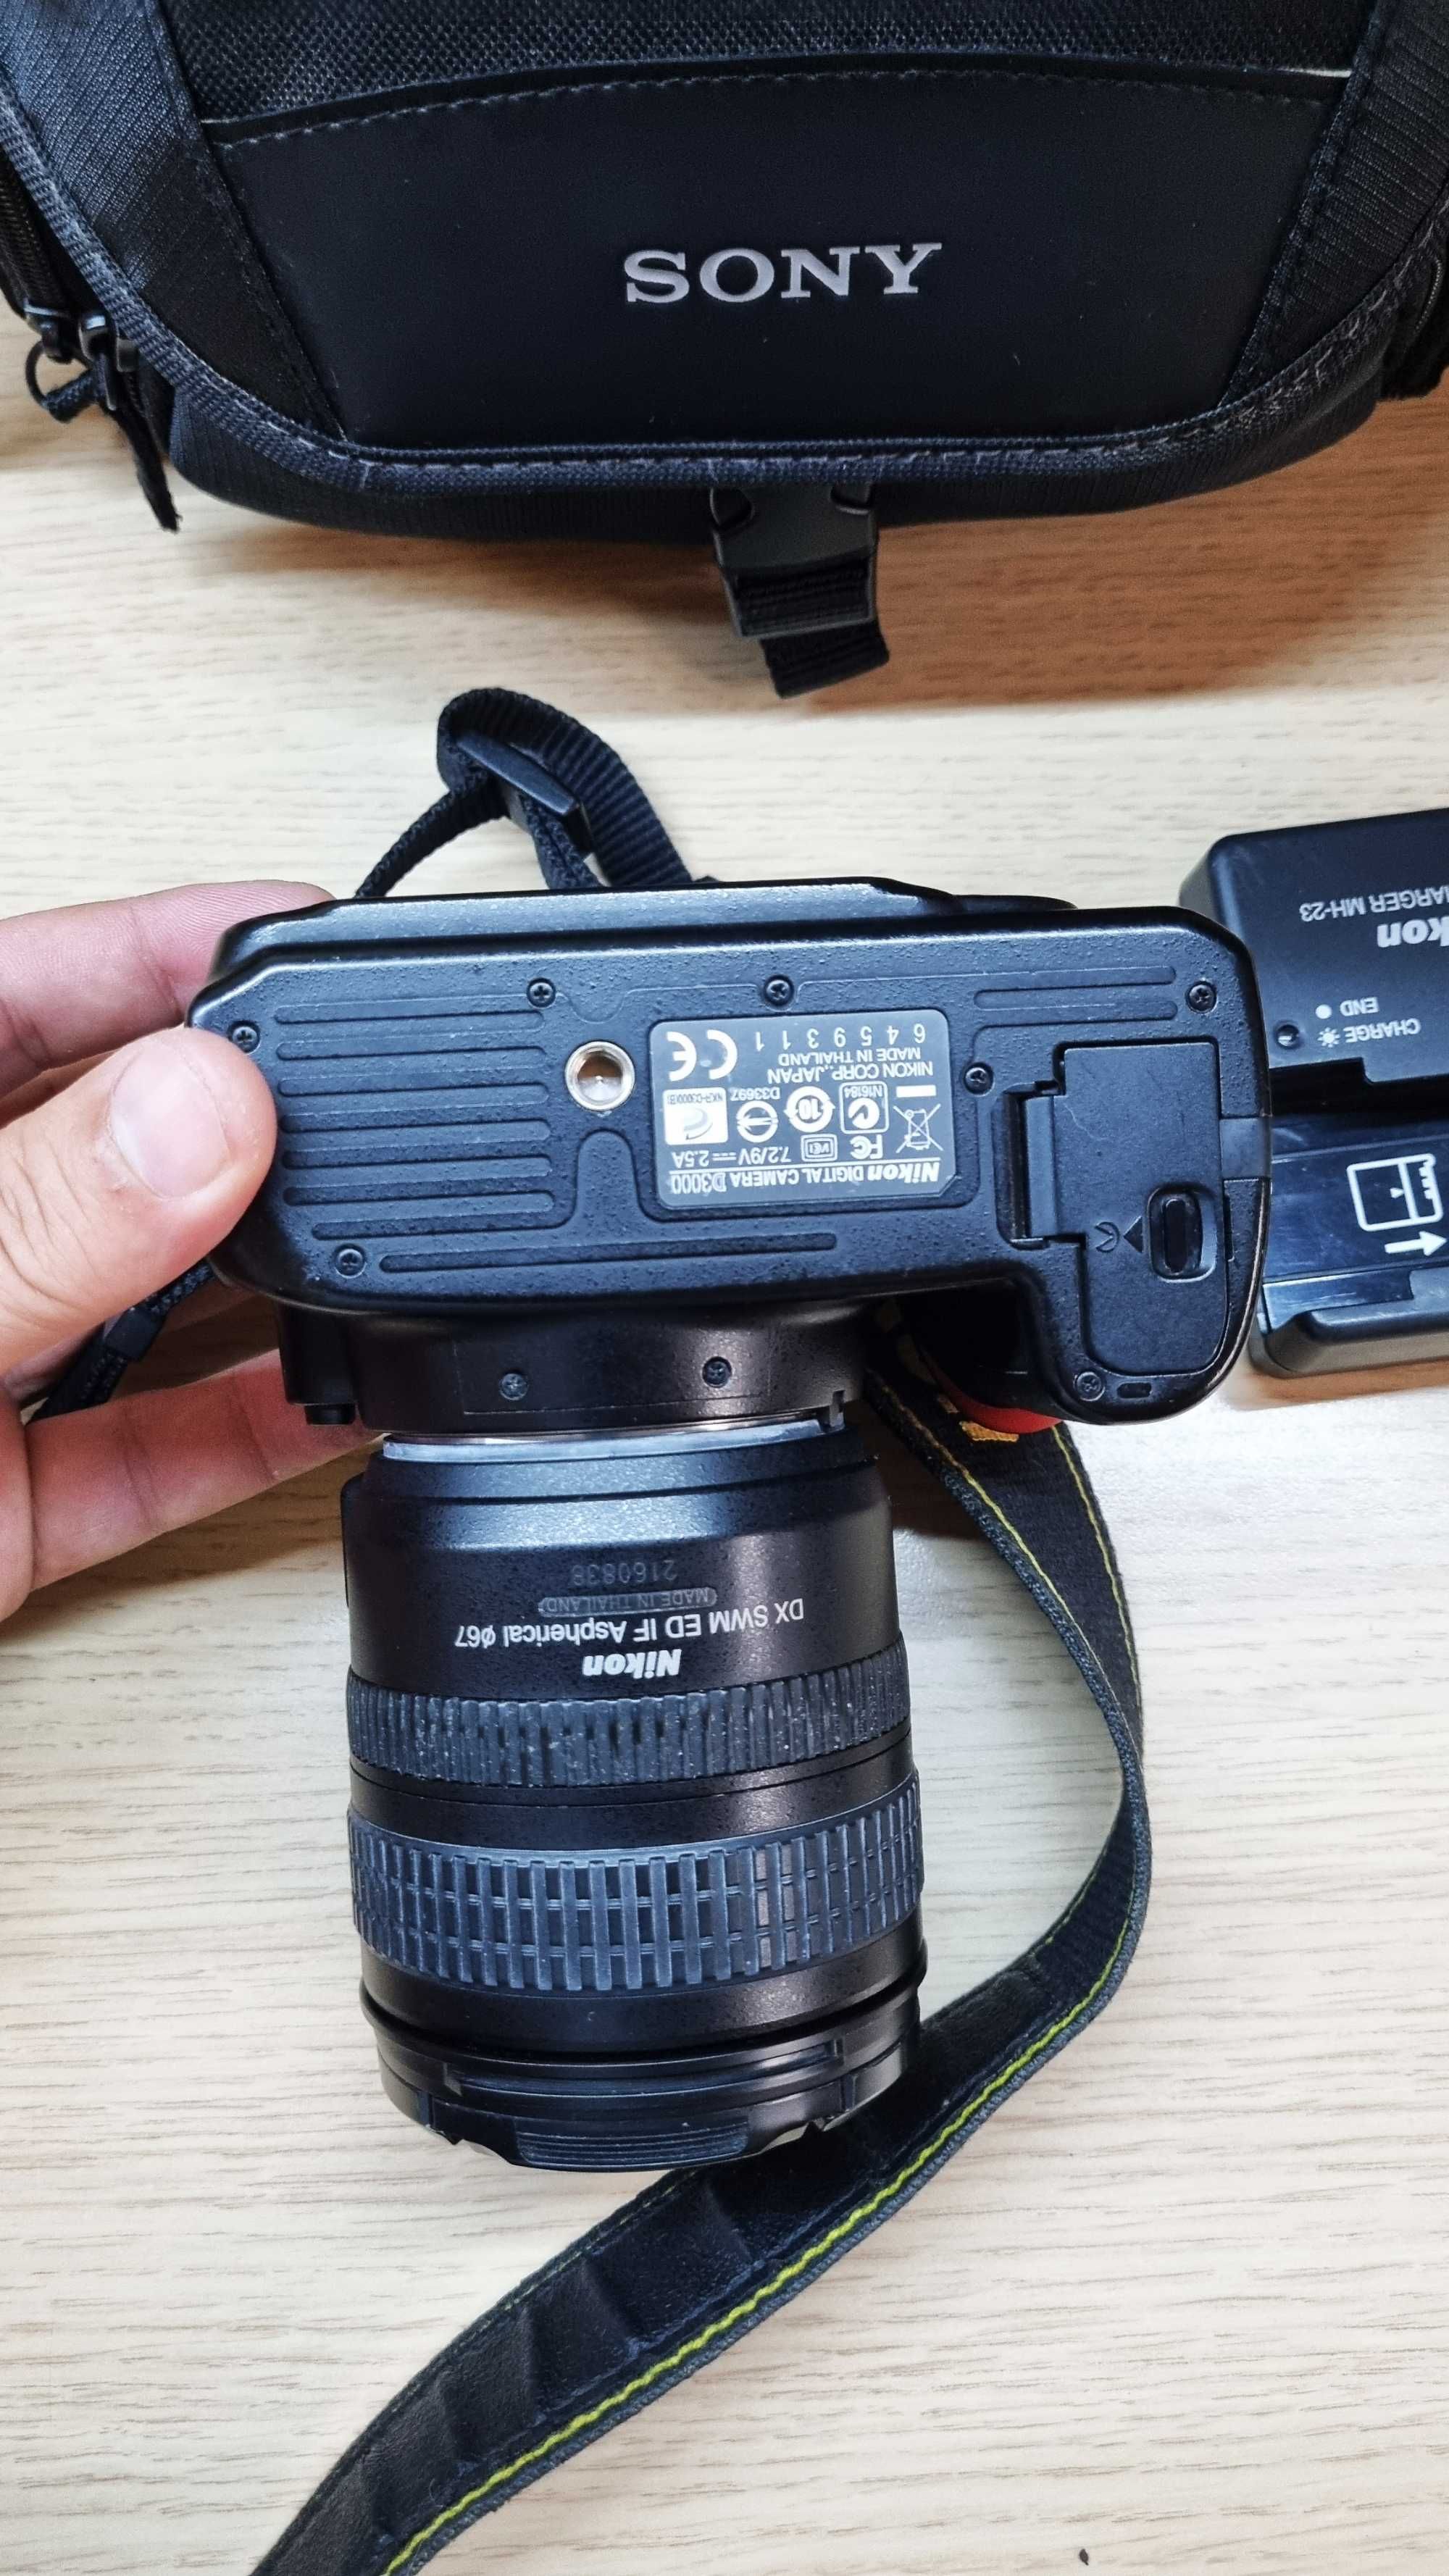 KIT FOTO INCEPATOR- Nikon D3000+ Obiectiv 18-70mm+ Geanta